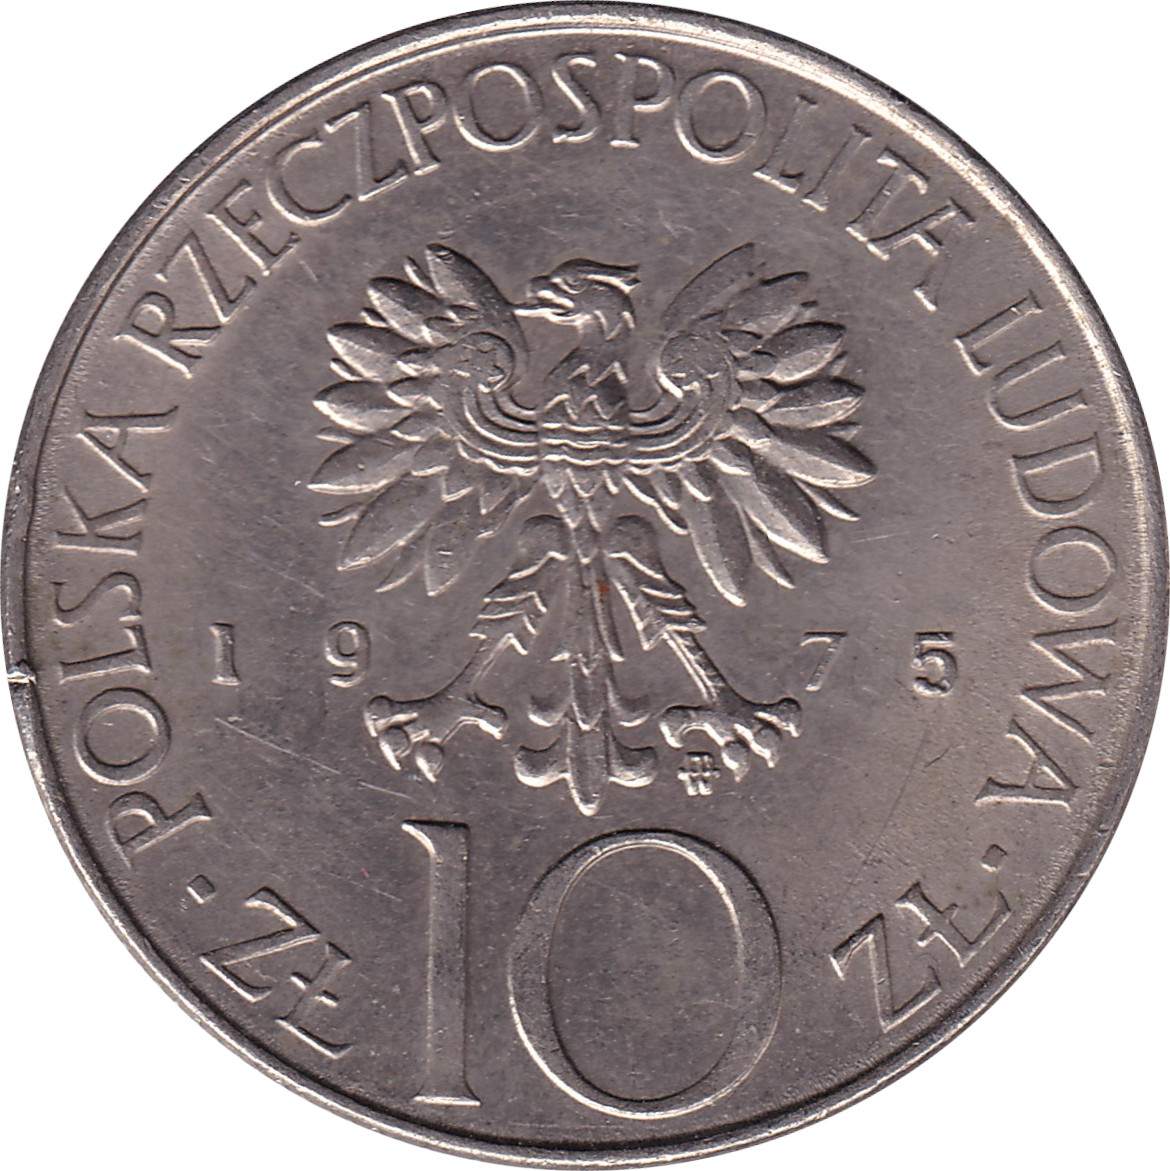 10 zlotych - République populaire - Adam Micklewicz